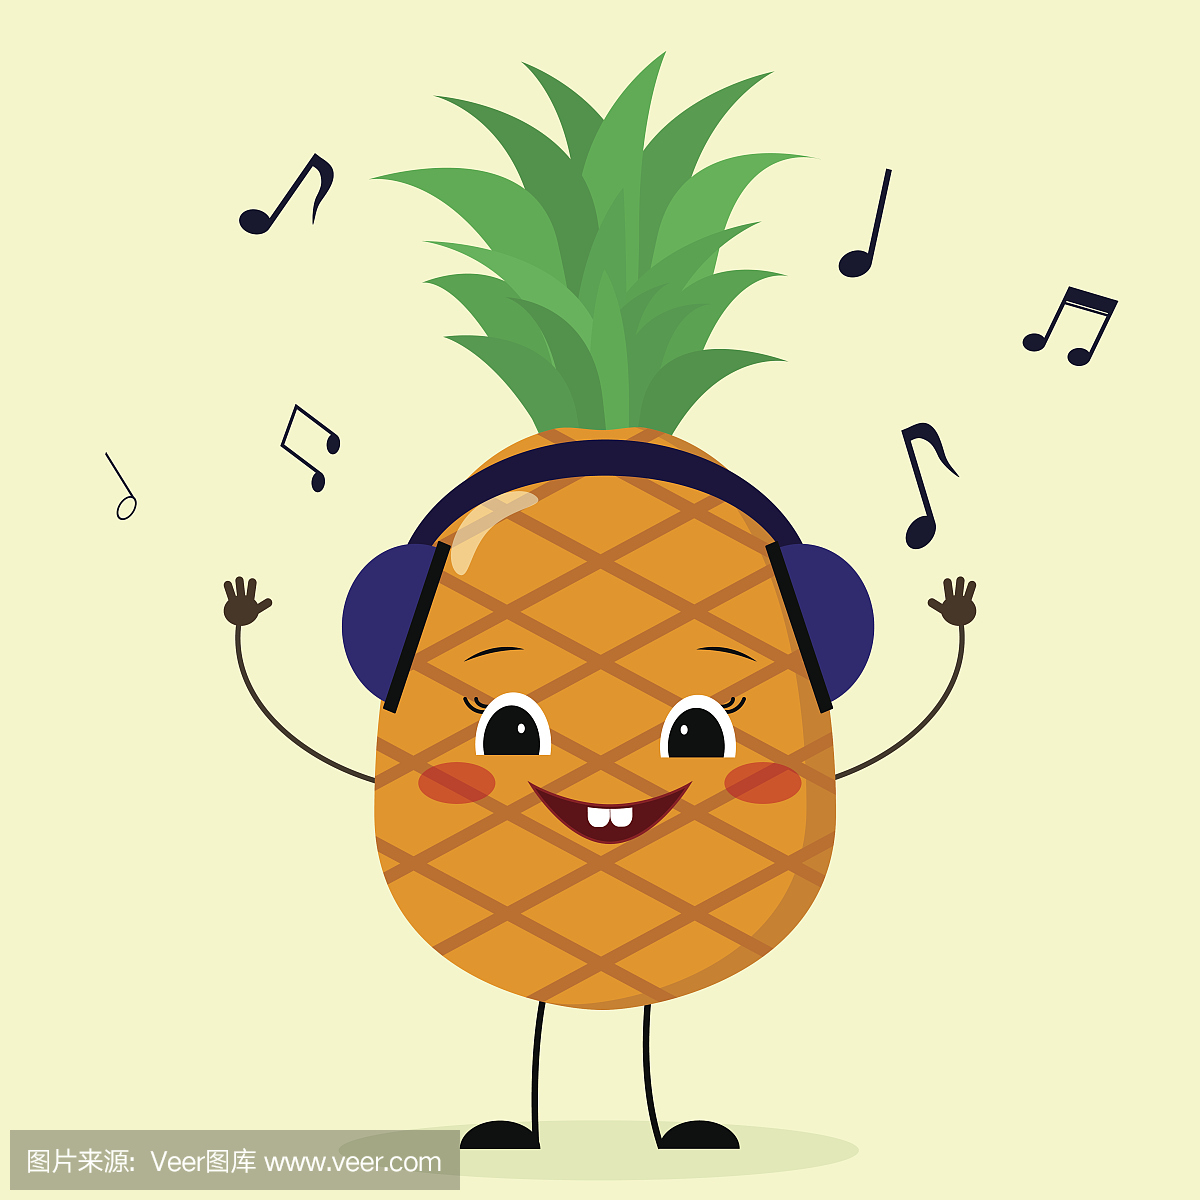 Pineapple Smiley in headphones.